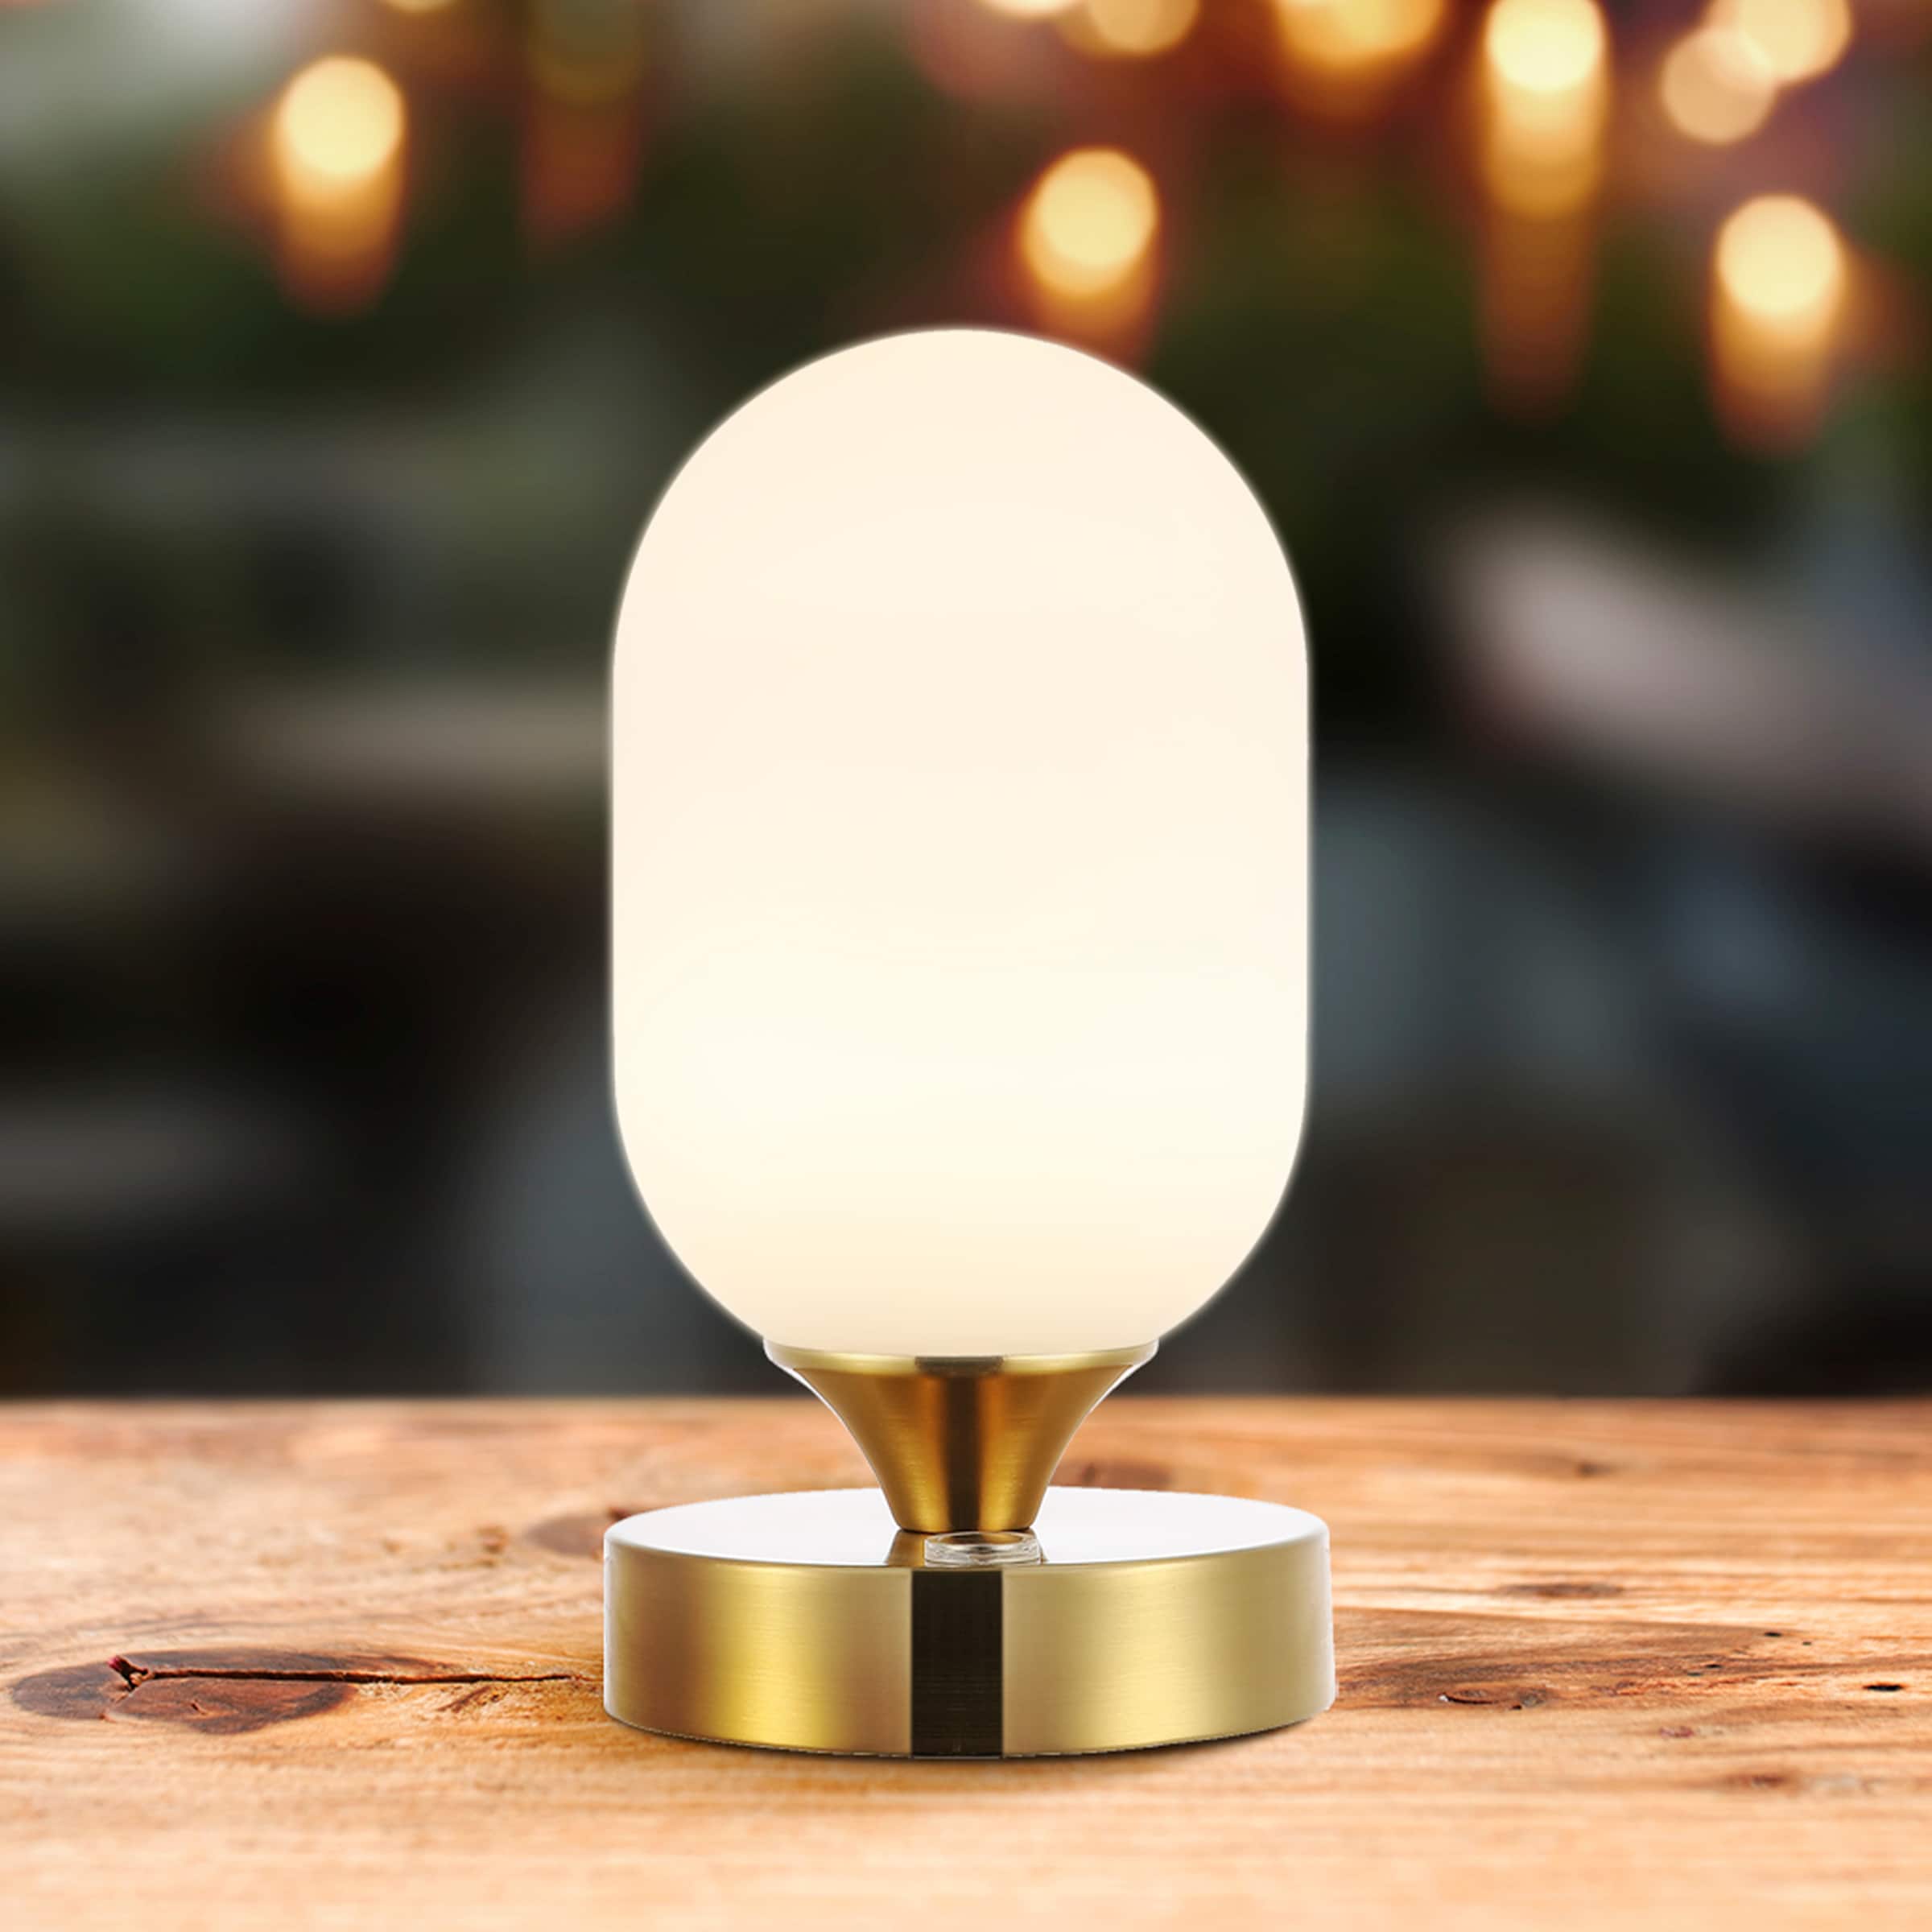 Lampe de Table ovale rechargeable